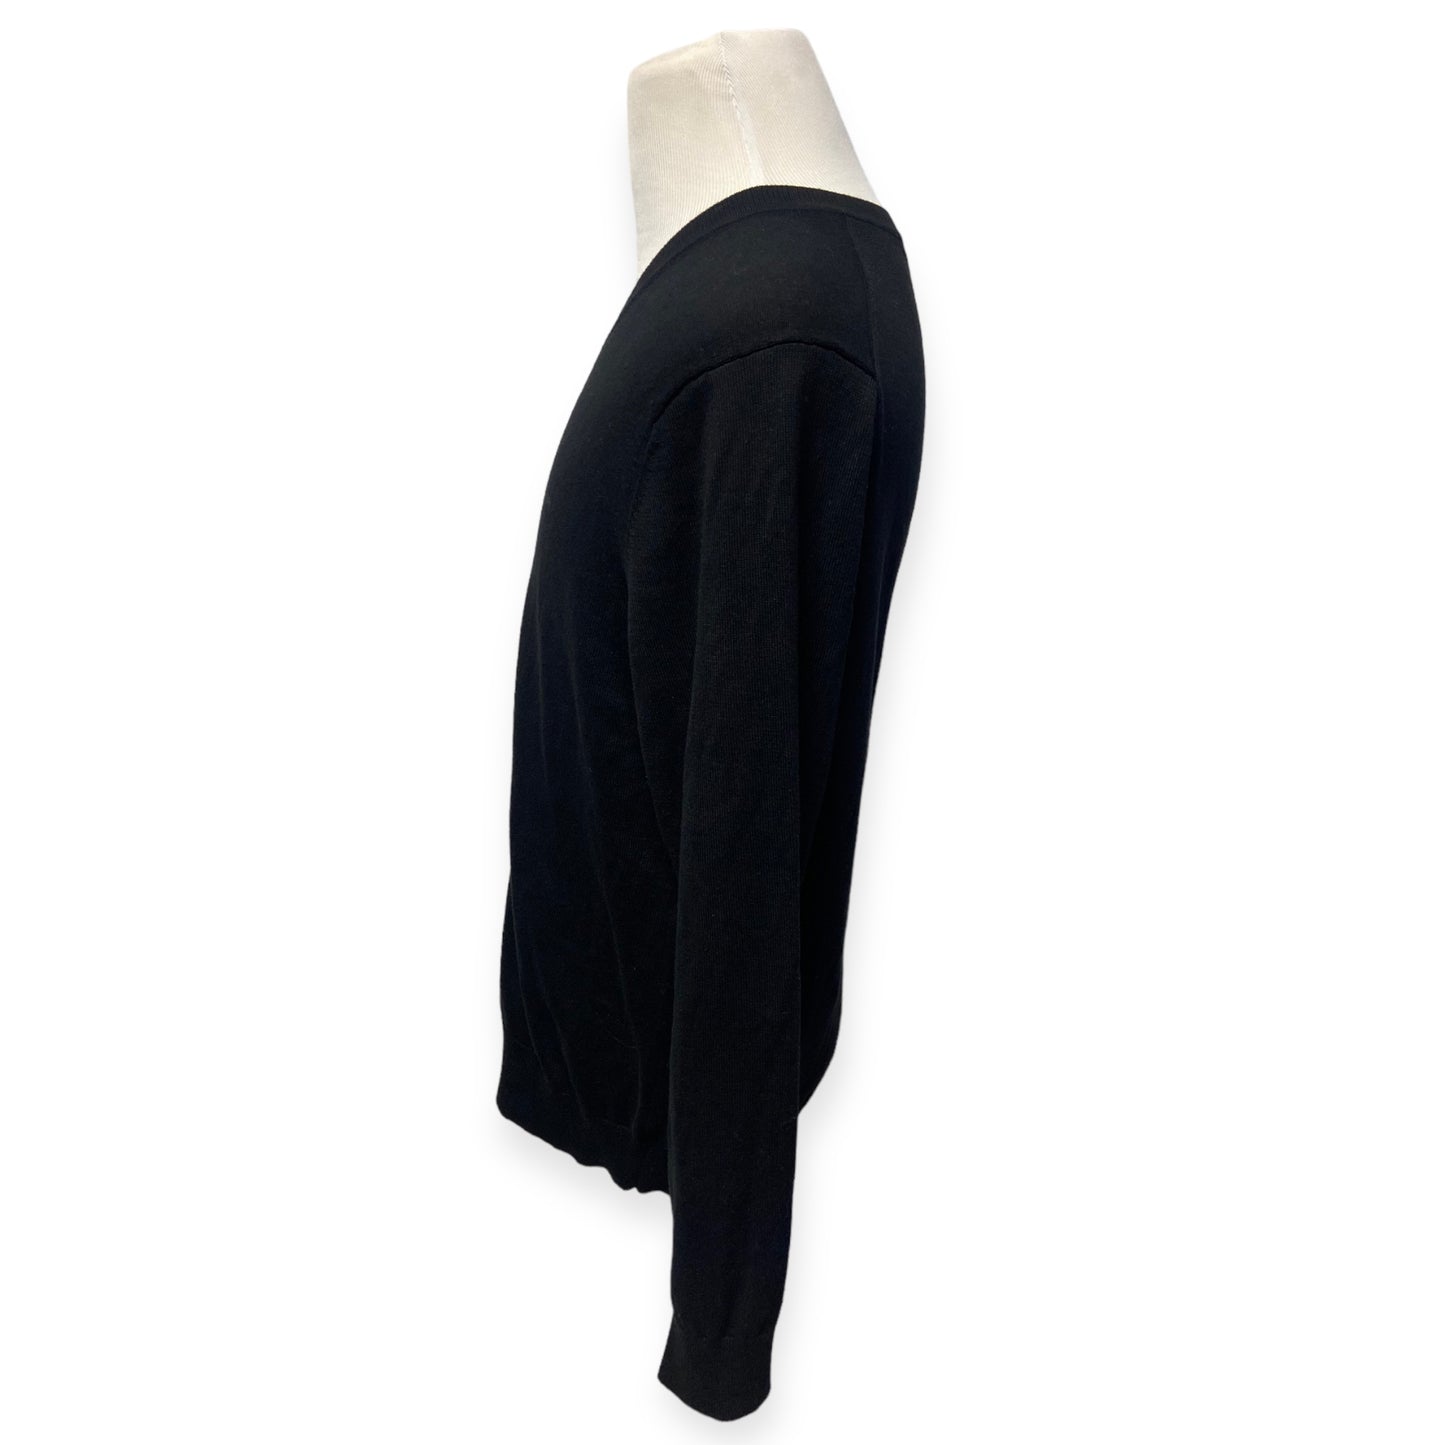 Michael Kors Men’s Black Sweater (Size L)